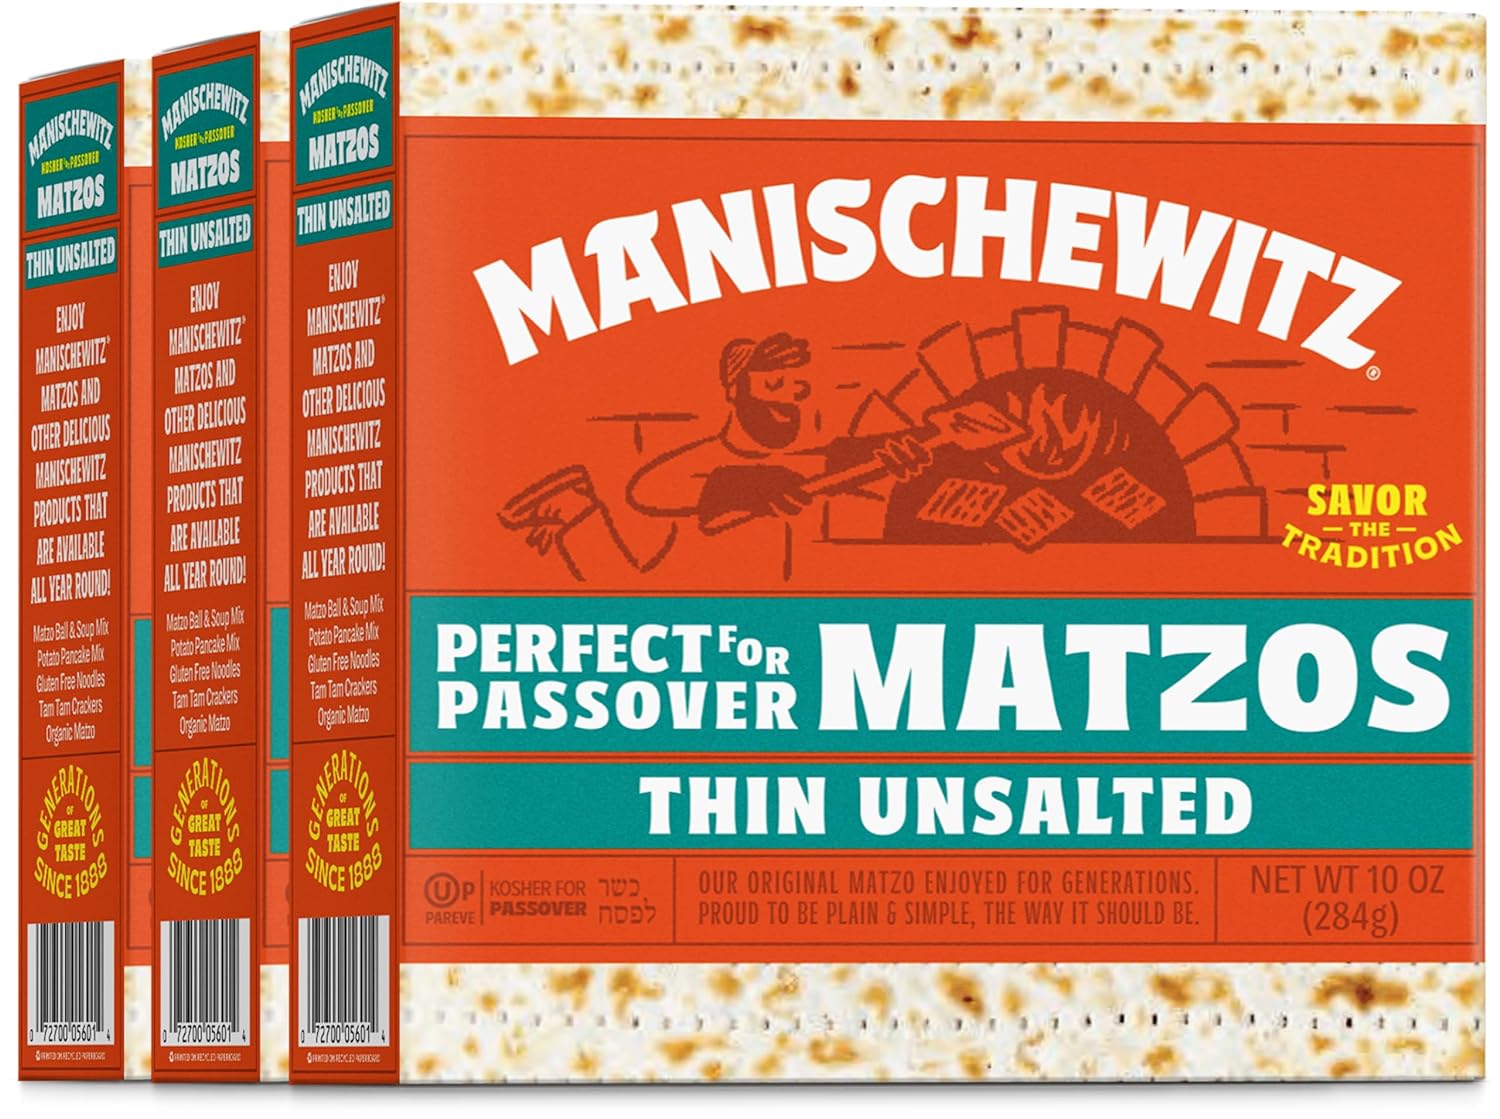 Manischewitz Original "Thin Unsalted Matzo" 10oz (3 Pack) Airy Crispy Crackers, Just Flour & Water, Sodium Free, Non GMO